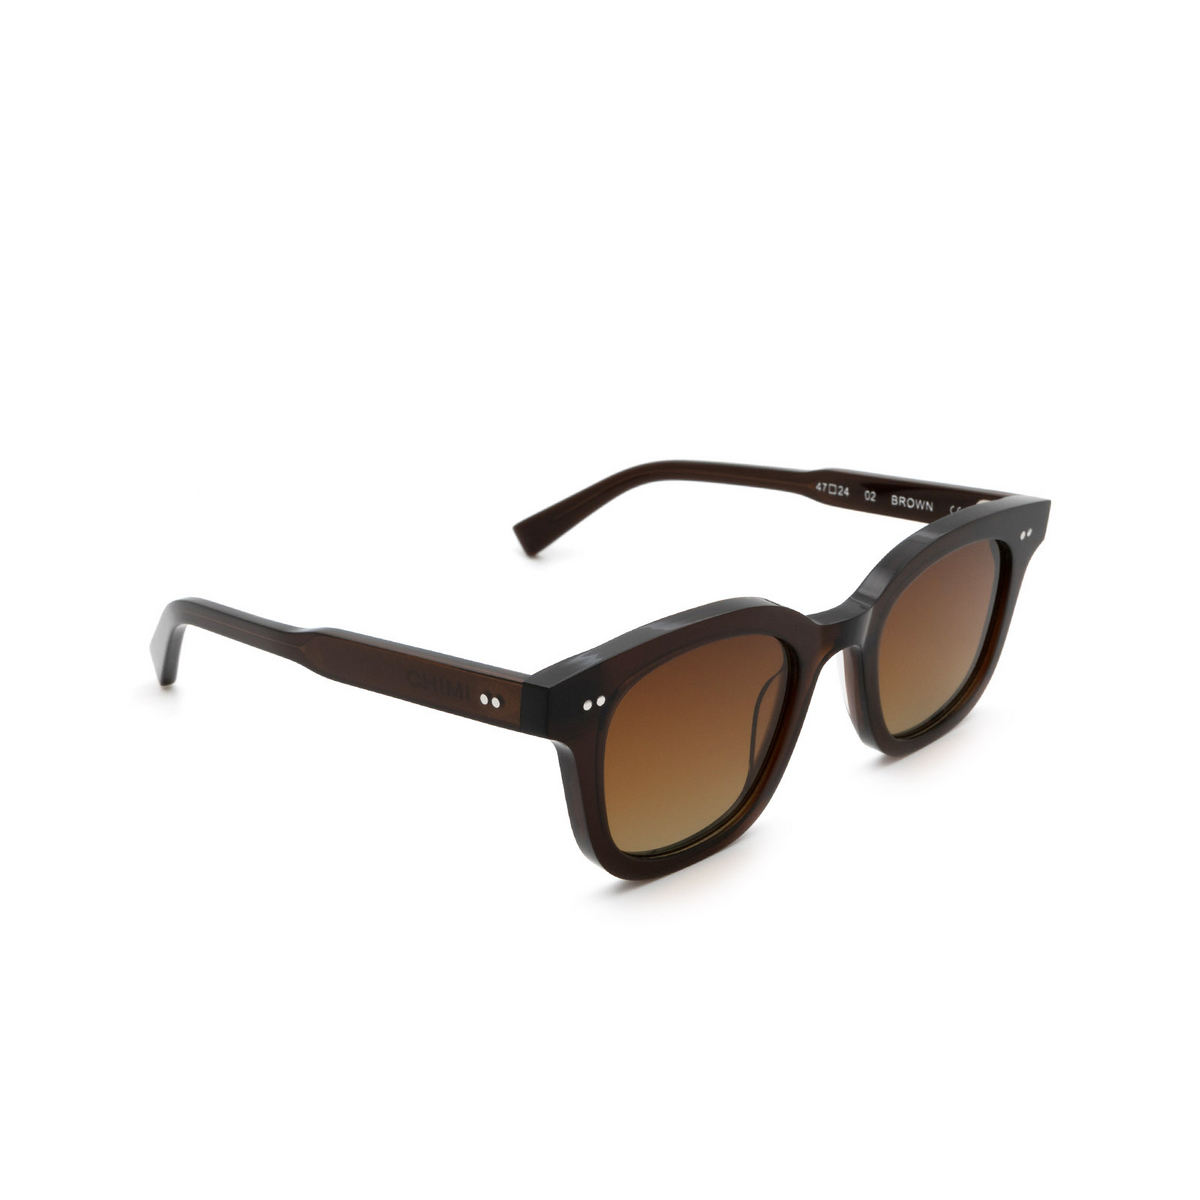 Chimi® Square Sunglasses: 02 color Brown - three-quarters view.